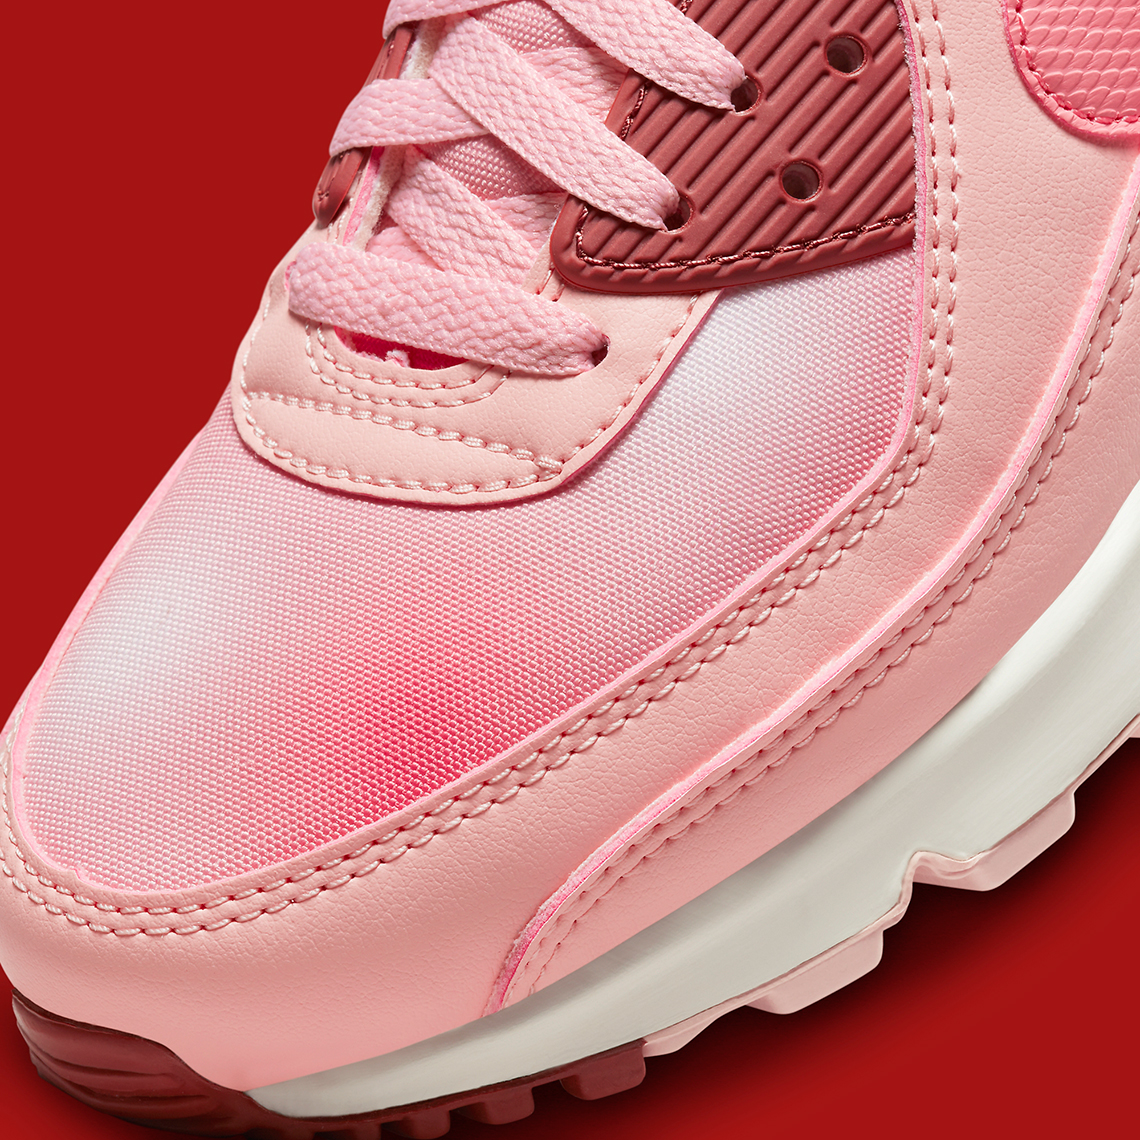 Nike Air Max 90 Pink Blush Fn0322 600 5